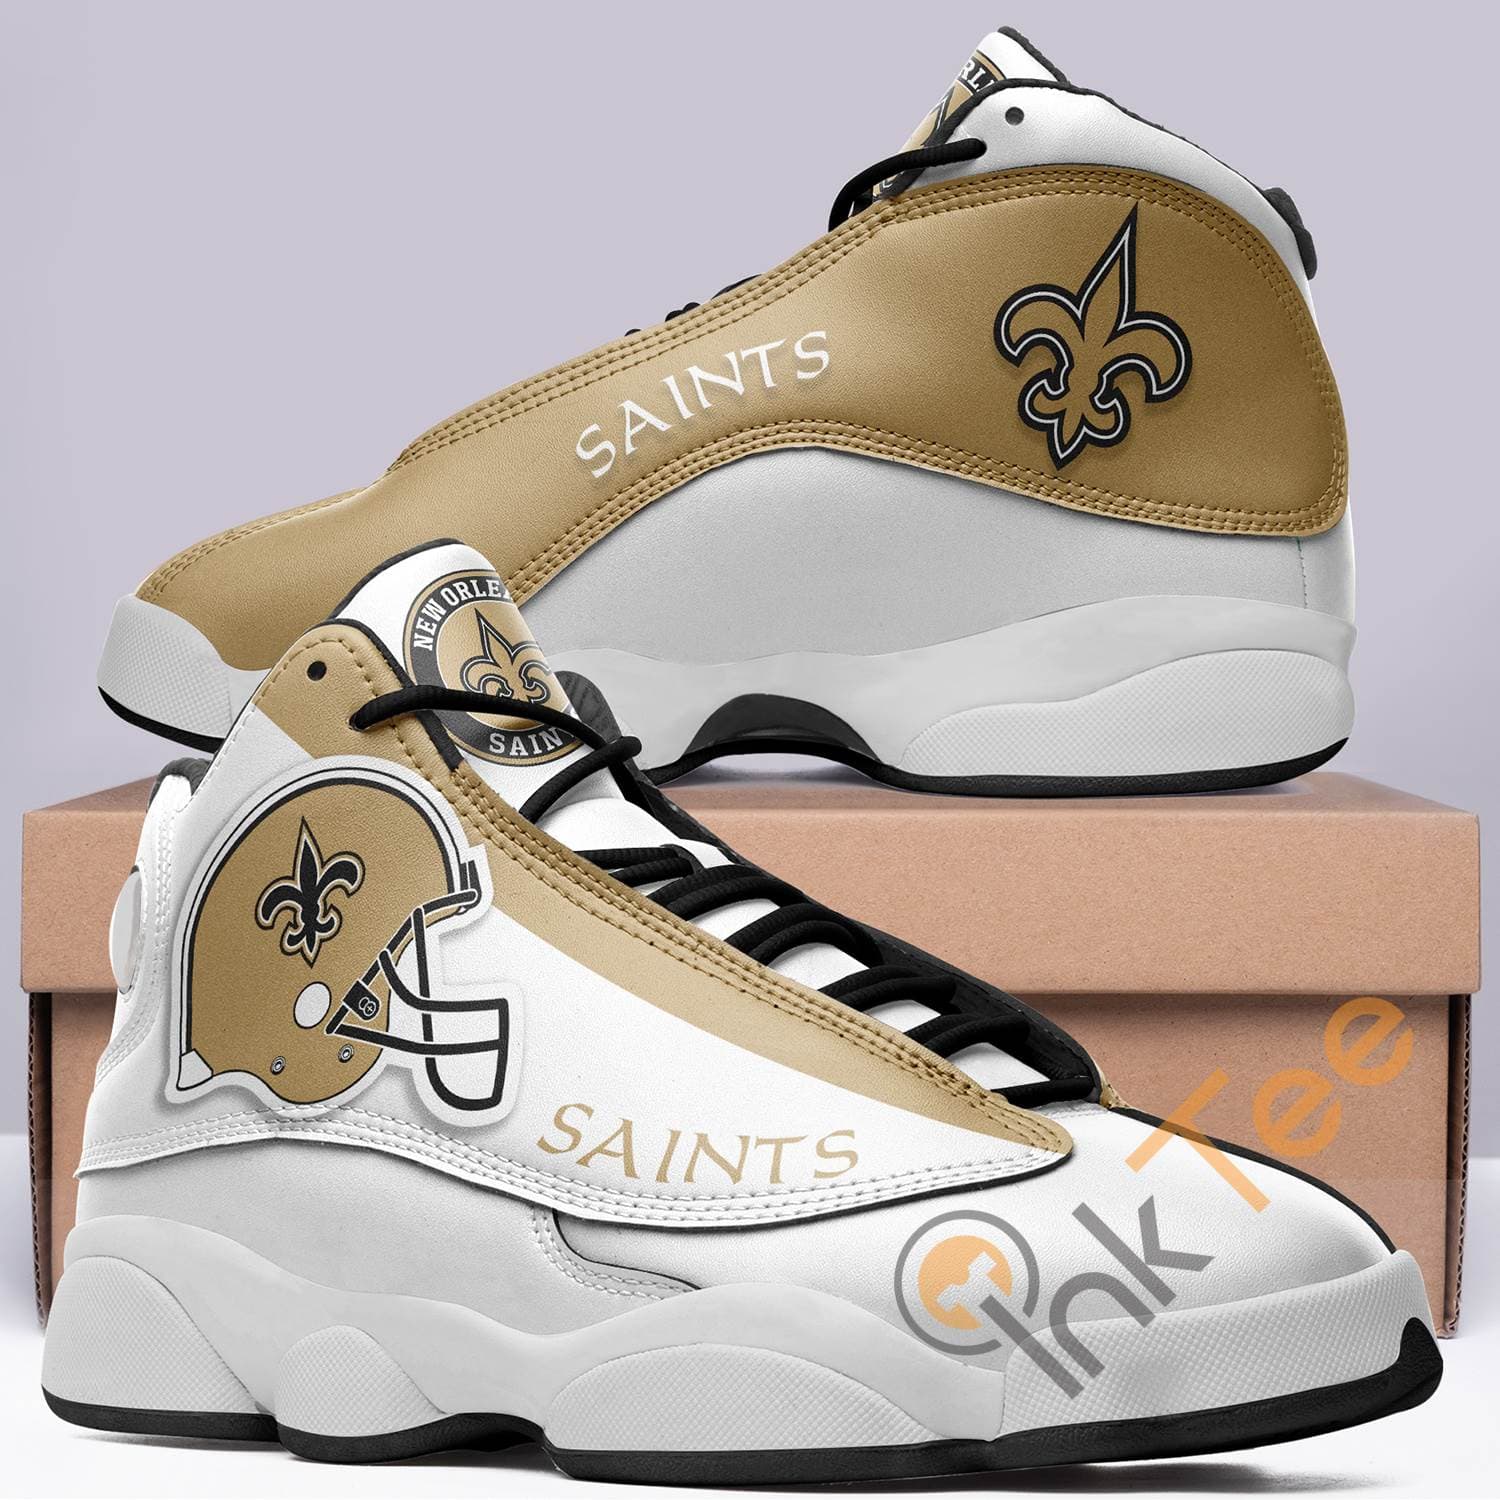 New Orleans Saints Team Logo Air Jordan Shoes